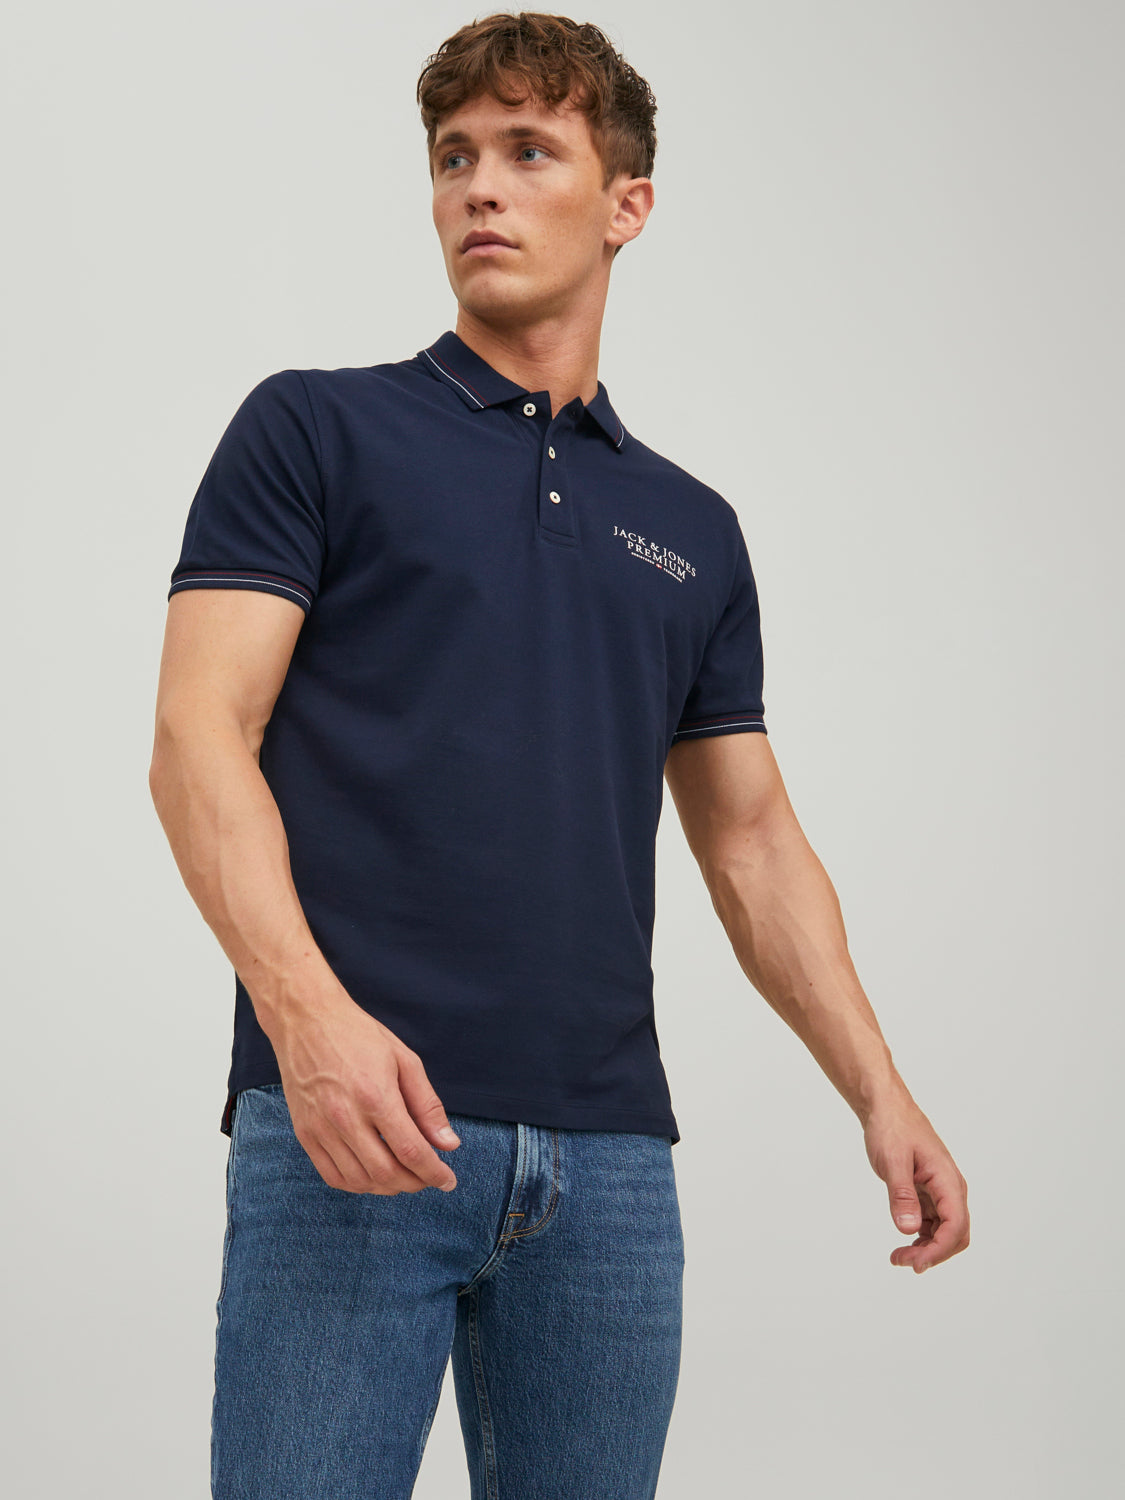 JPRBLUARCHIE Polo Shirt - Navy Blazer